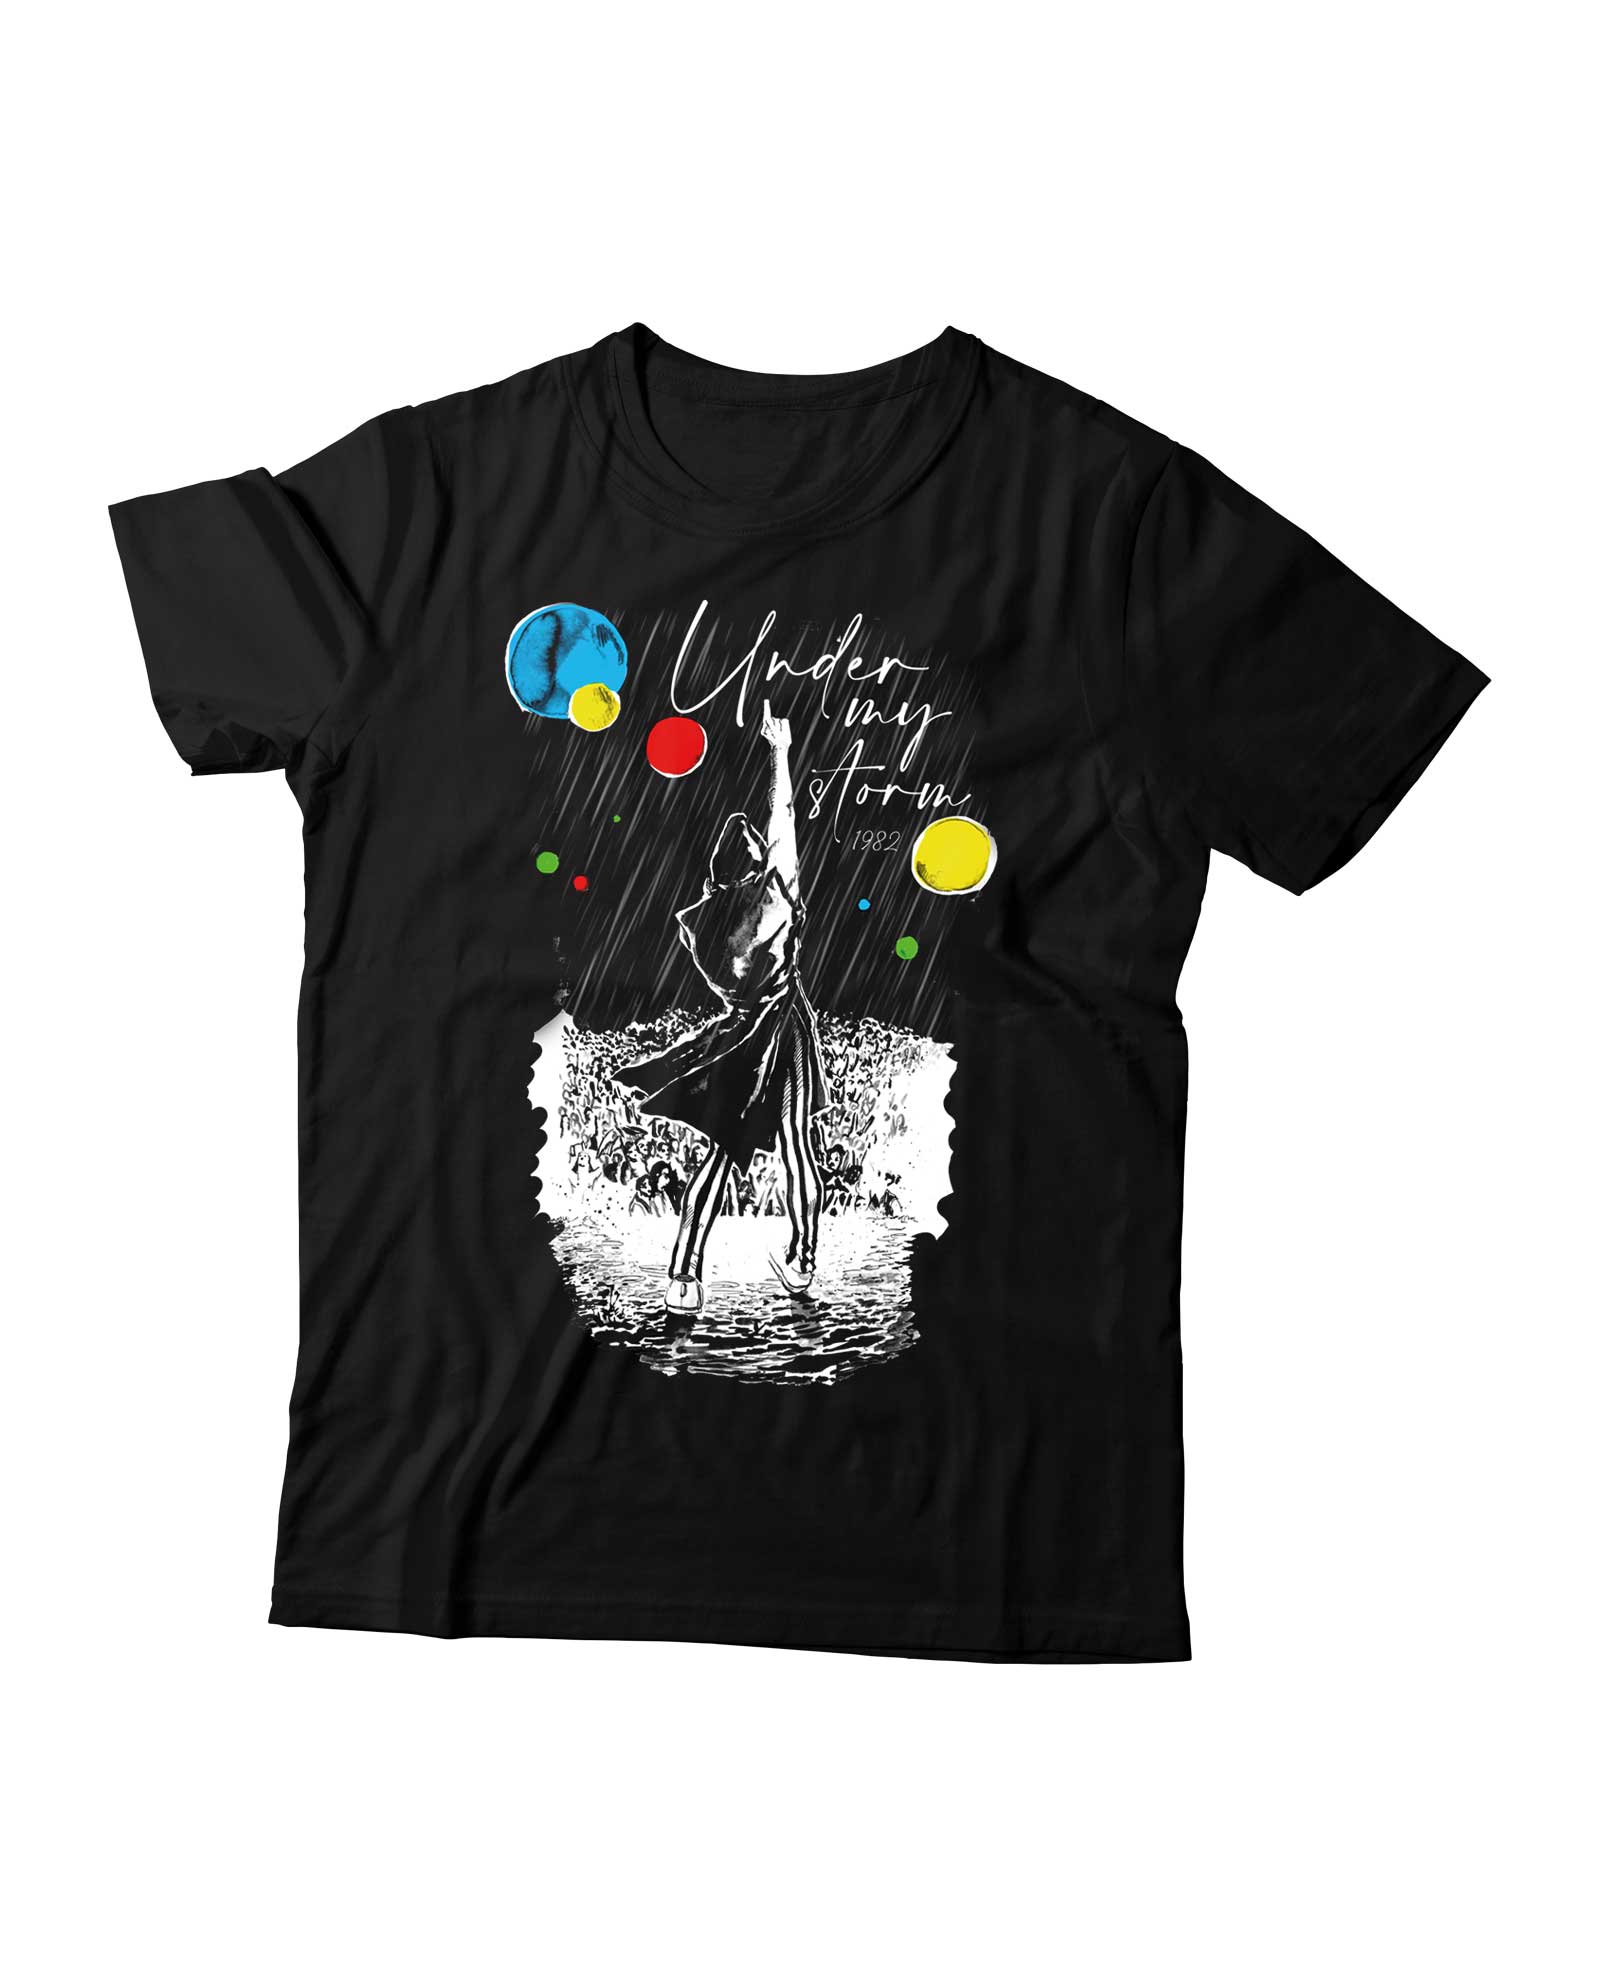 Camiseta Under My Storm + ENTRADA ORIGINAL ROLLING STONES 1982 - Gay Mercader - Rocktud - Rocktud Brand